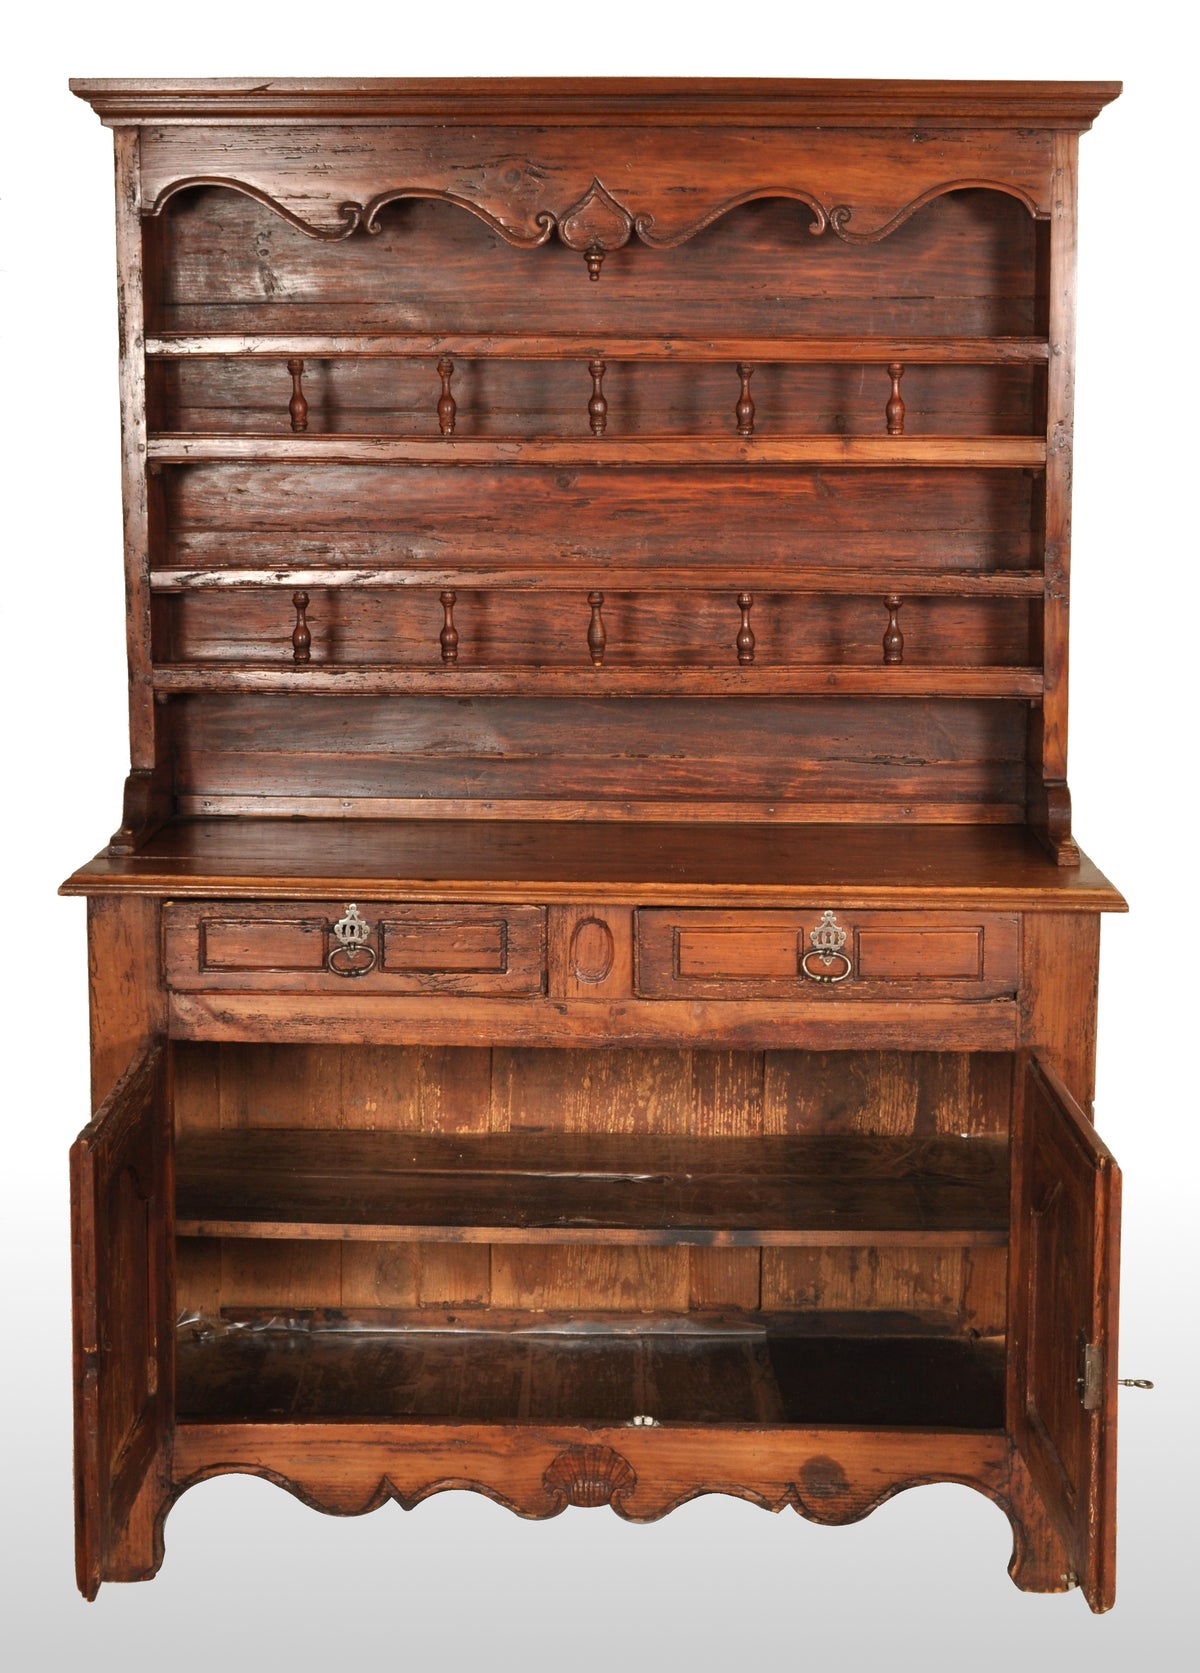 Antique 18th Century French Provincial Dresser / Buffet / Sideboard / Server / Vaisselier, circa 1750